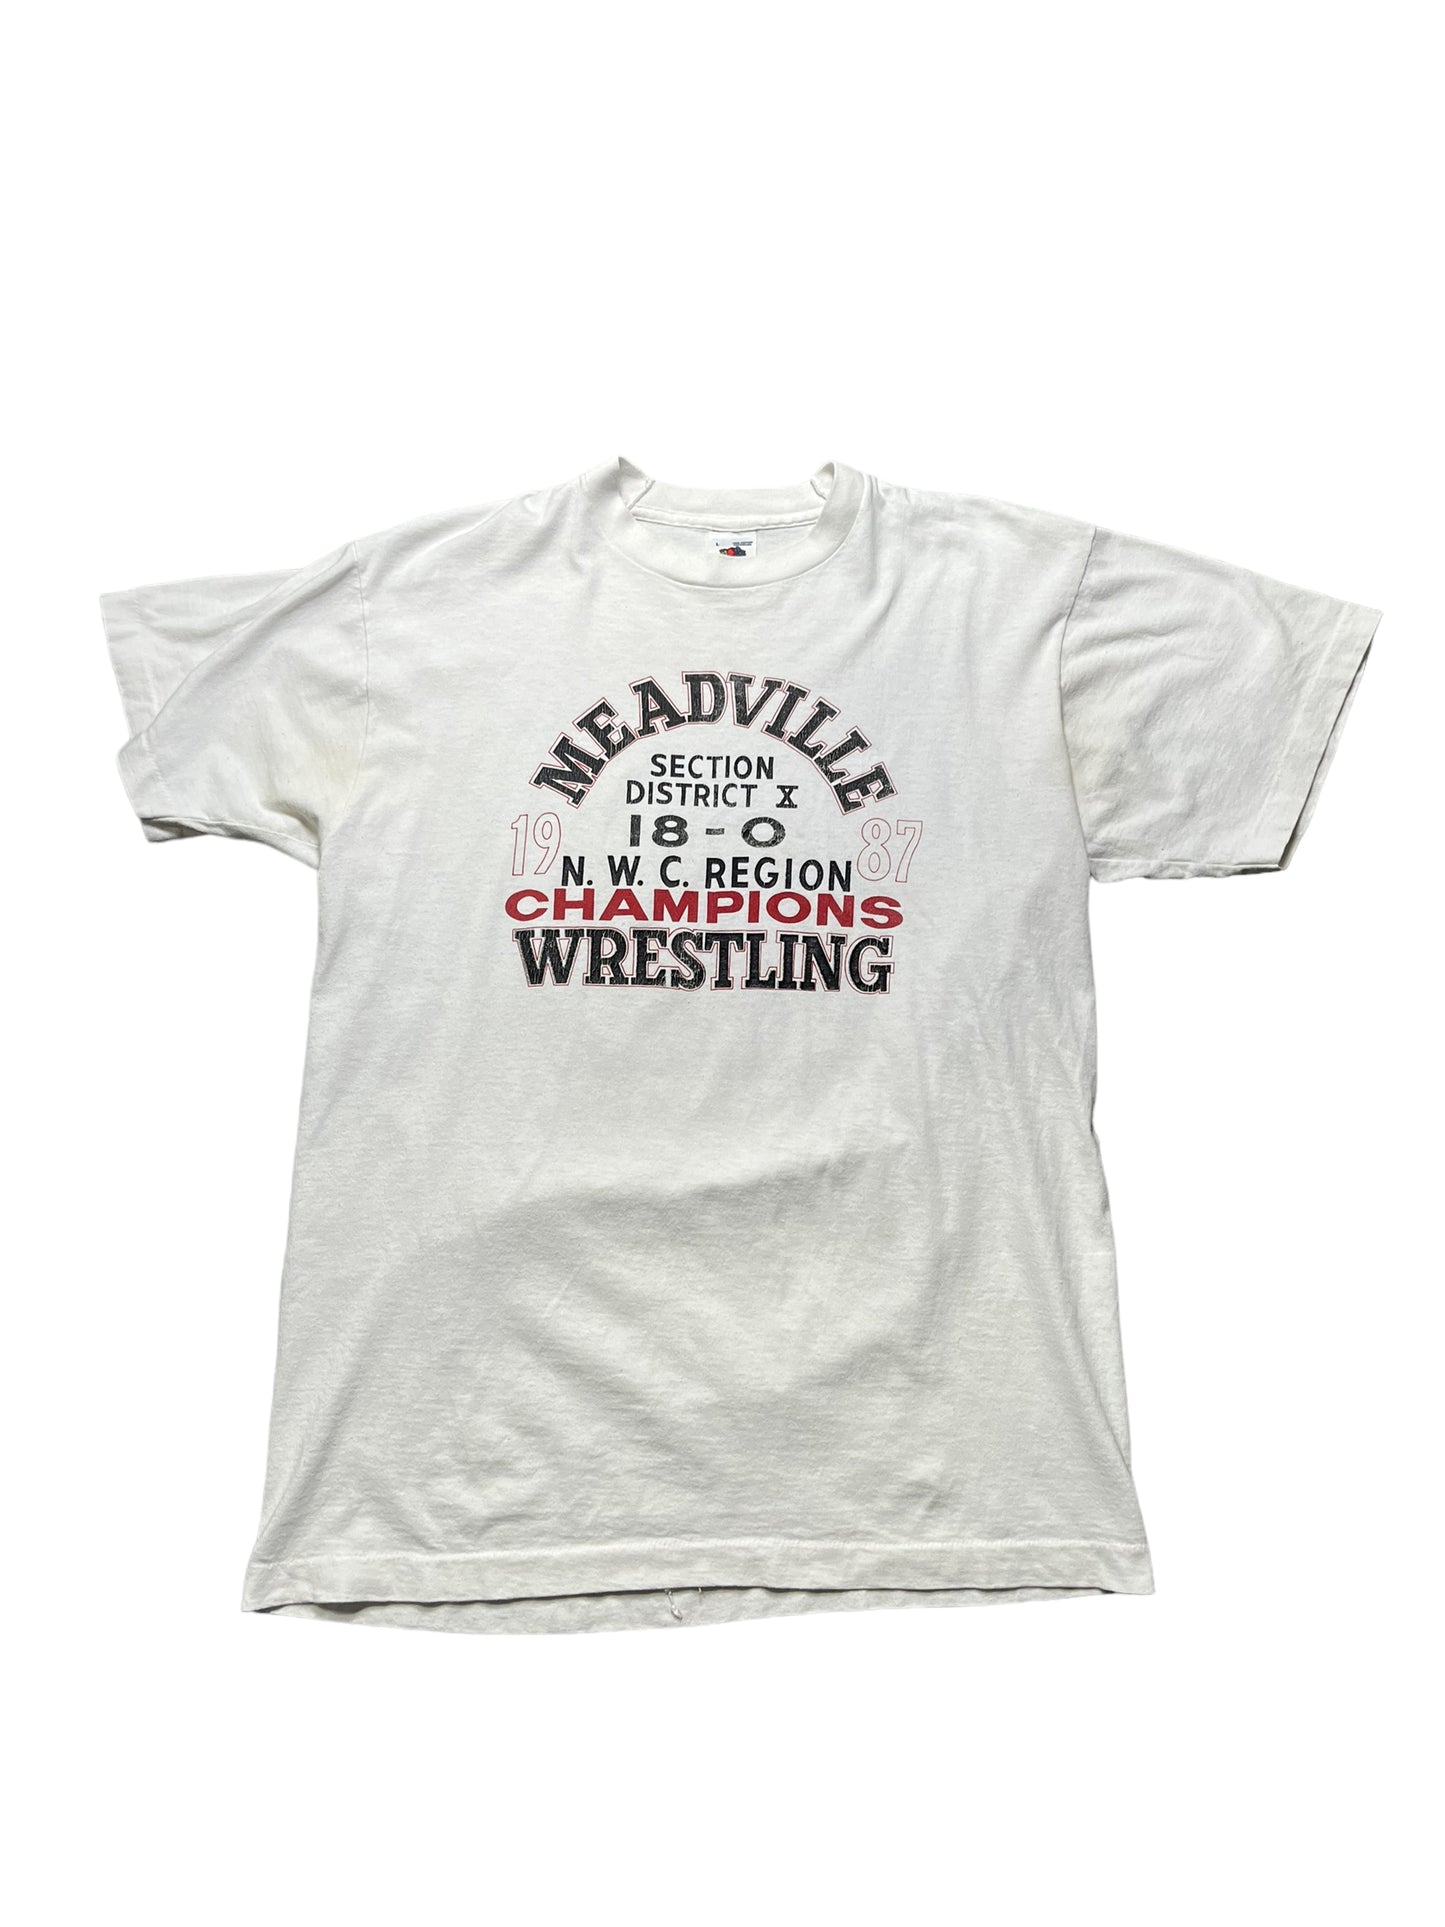 (L) 1987 Meadville Wrestling Double Sided Tee